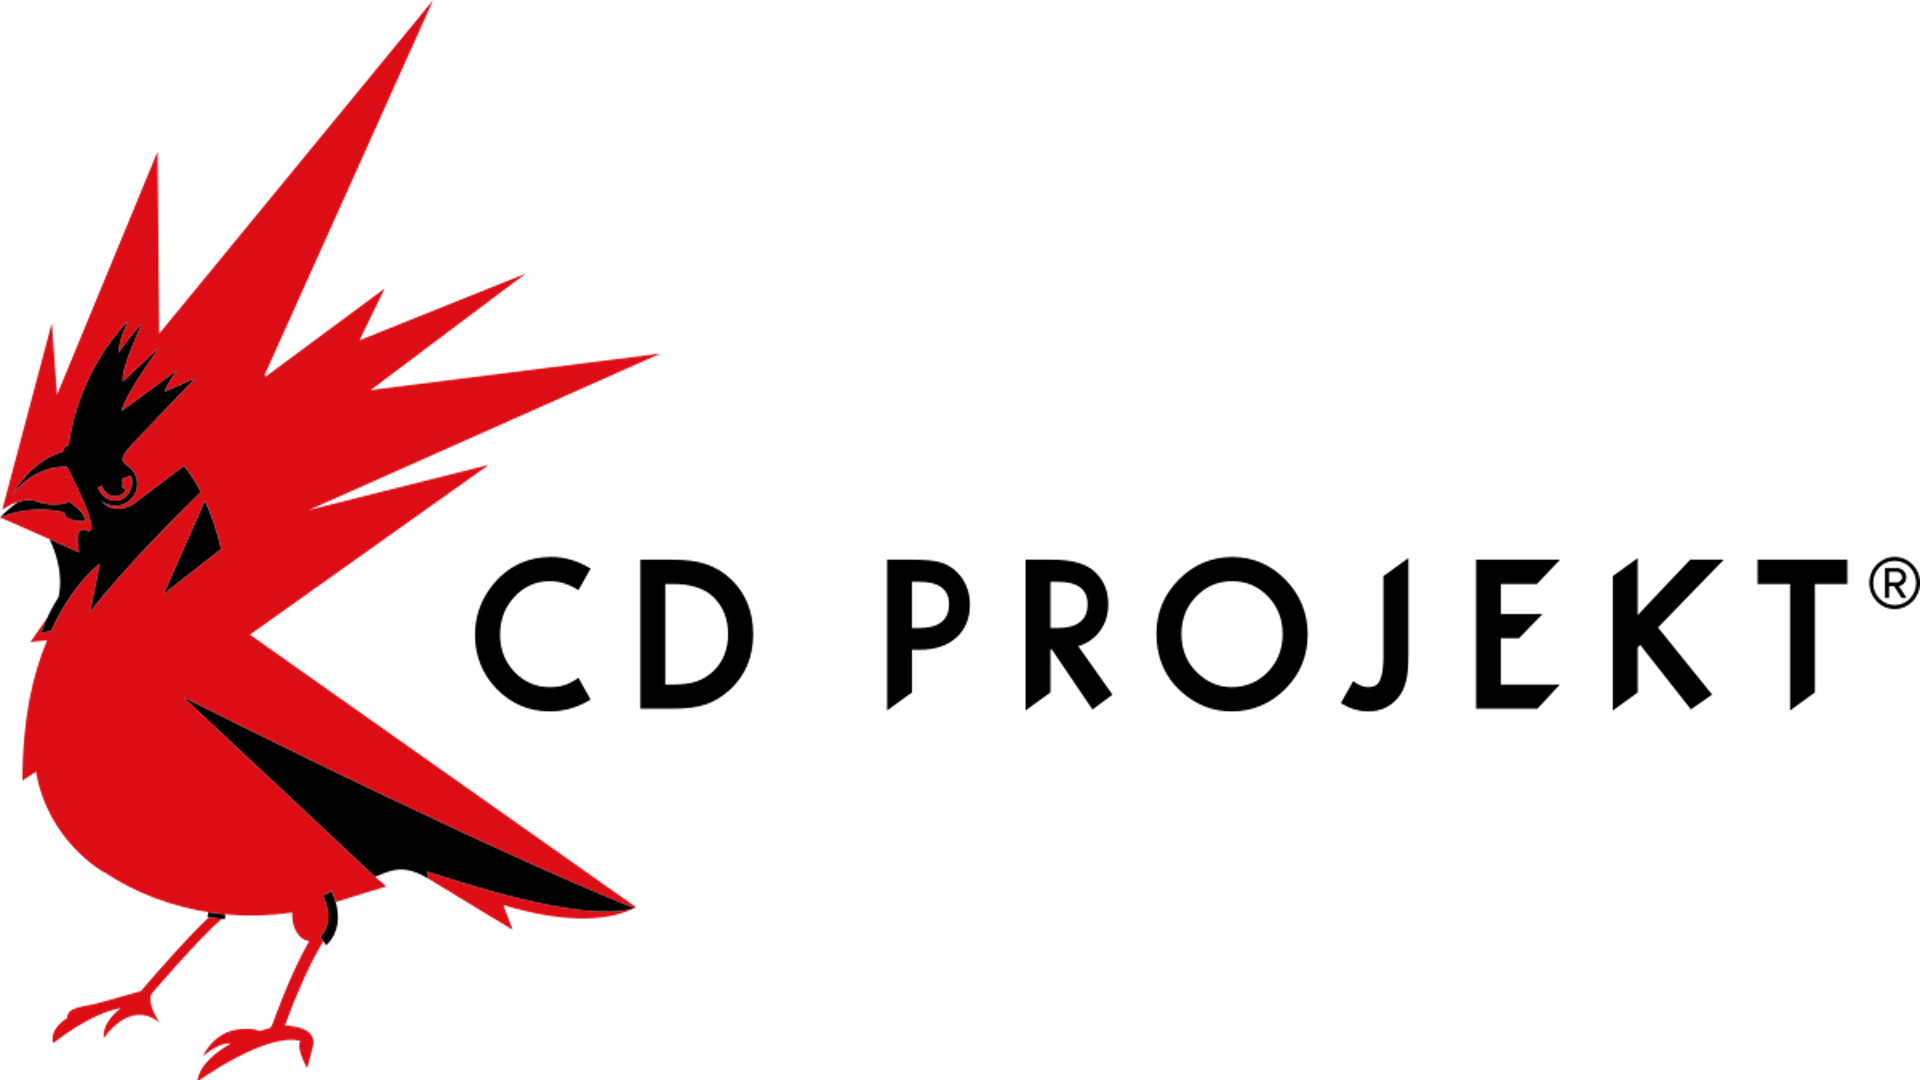 CD Projekt RED ประกาศความร่วมมือกับ Epic Games ไปอีกหลายปีด้วยการใช้ Unreal Engine 5